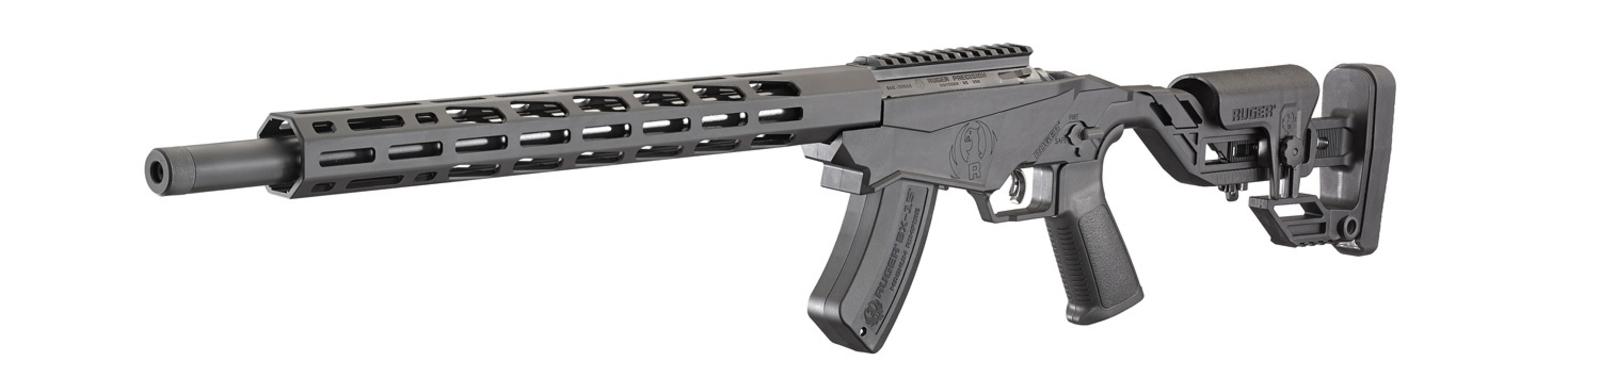 Ruger Precision® Rimfire Bolt-Action Rifle Model 8402